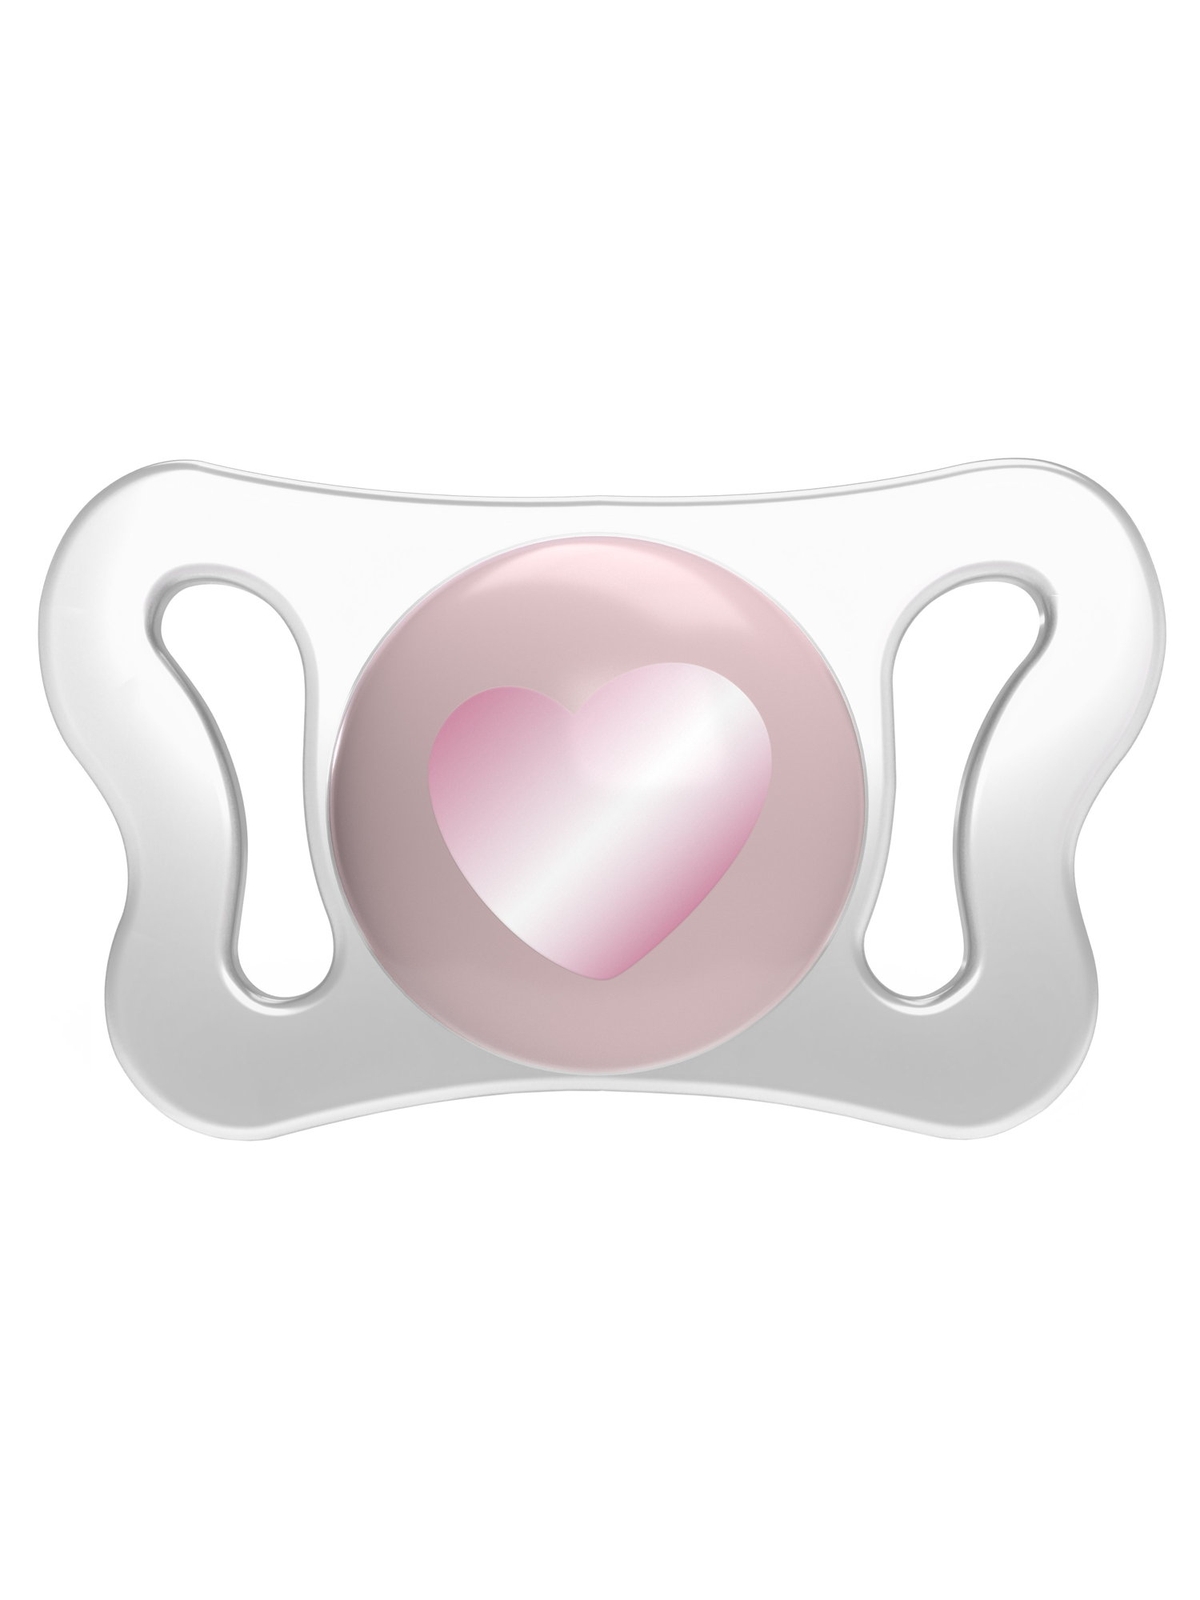 Chicco physioforma micrò pink, silicone, 0-2 mesi, 2 pezzi - Chicco